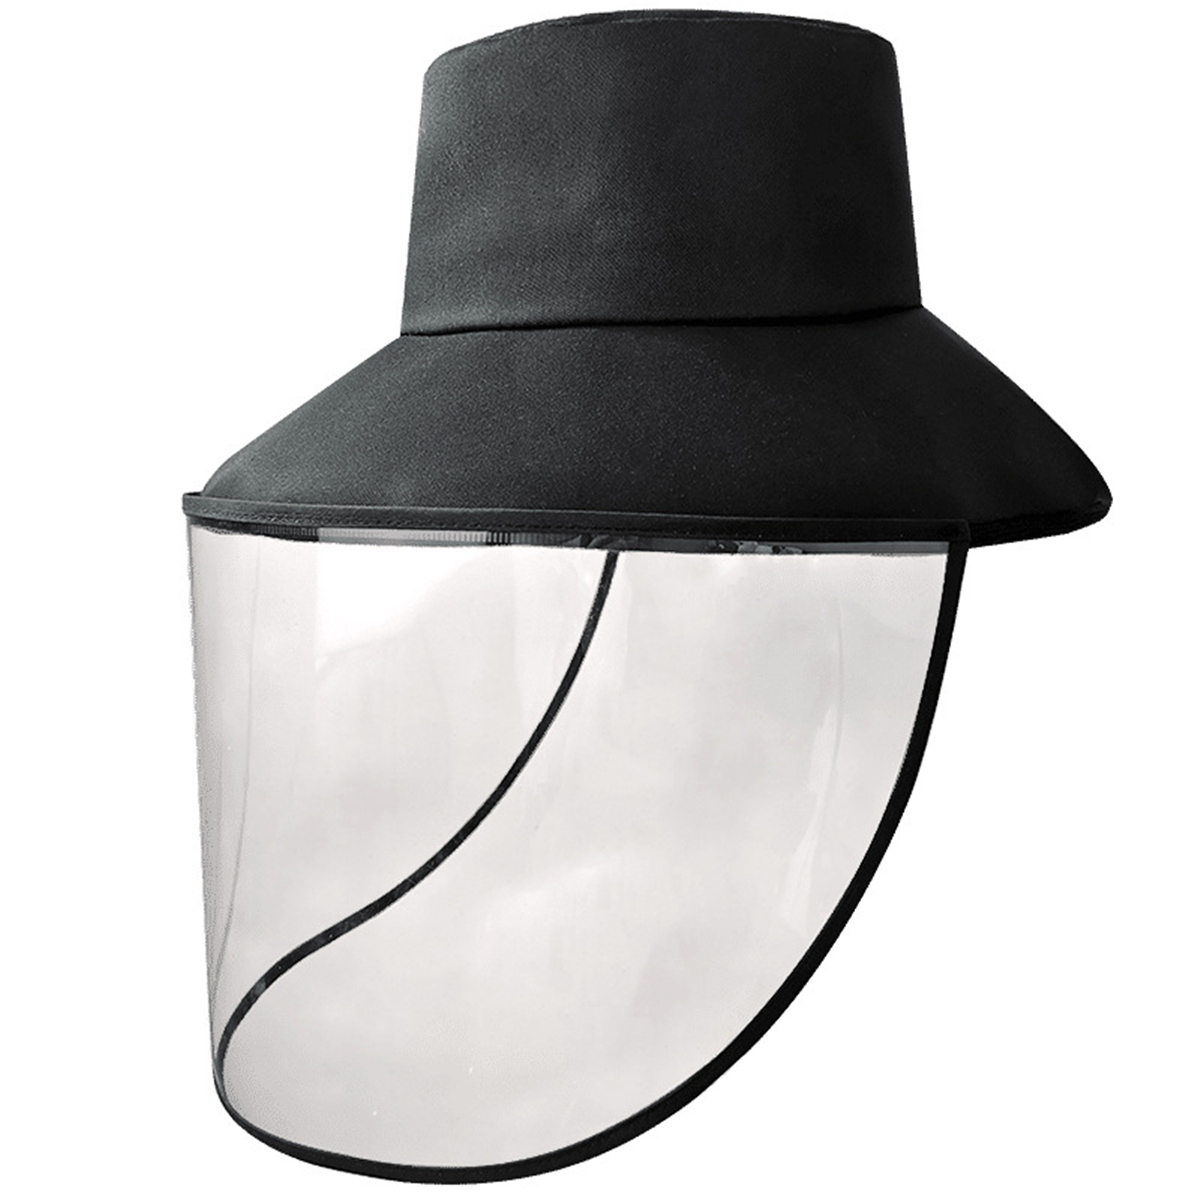 58cm-Removable-Protective-Cap-Anti-fog-Hat-Dustproof-Face-Protection-Fisherman-Cap-1650217-9